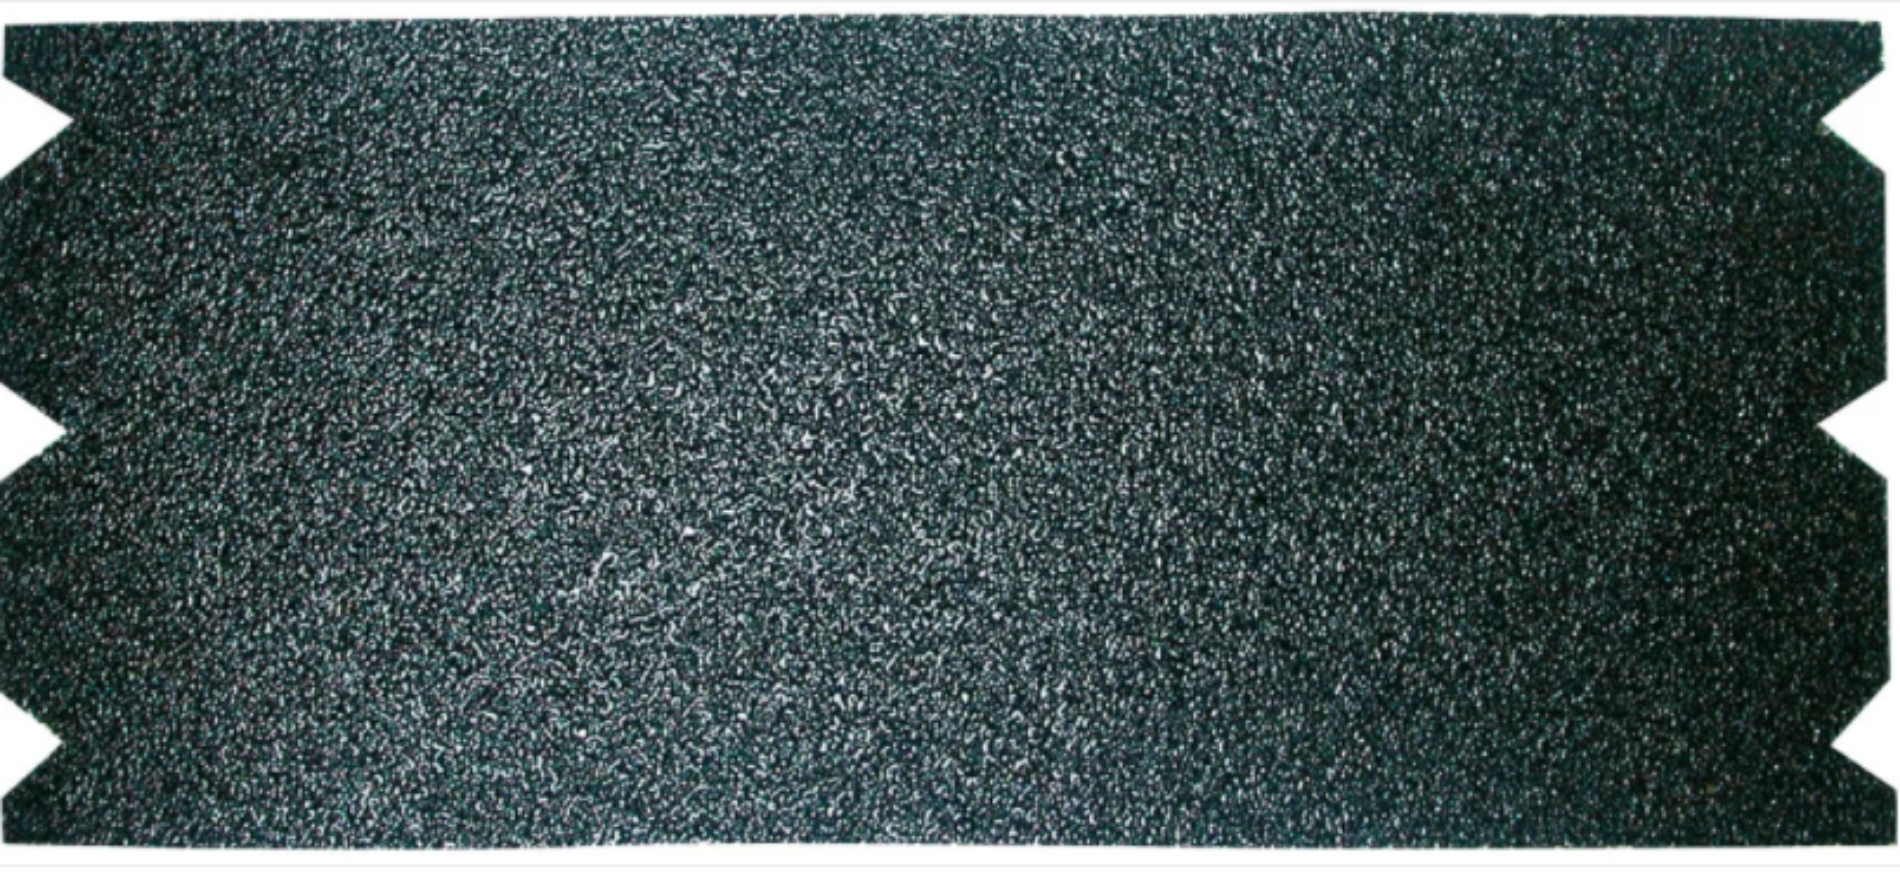 Picture of Makita Abrasive Floor Sander Sheet 80G (203mm x 476mm)